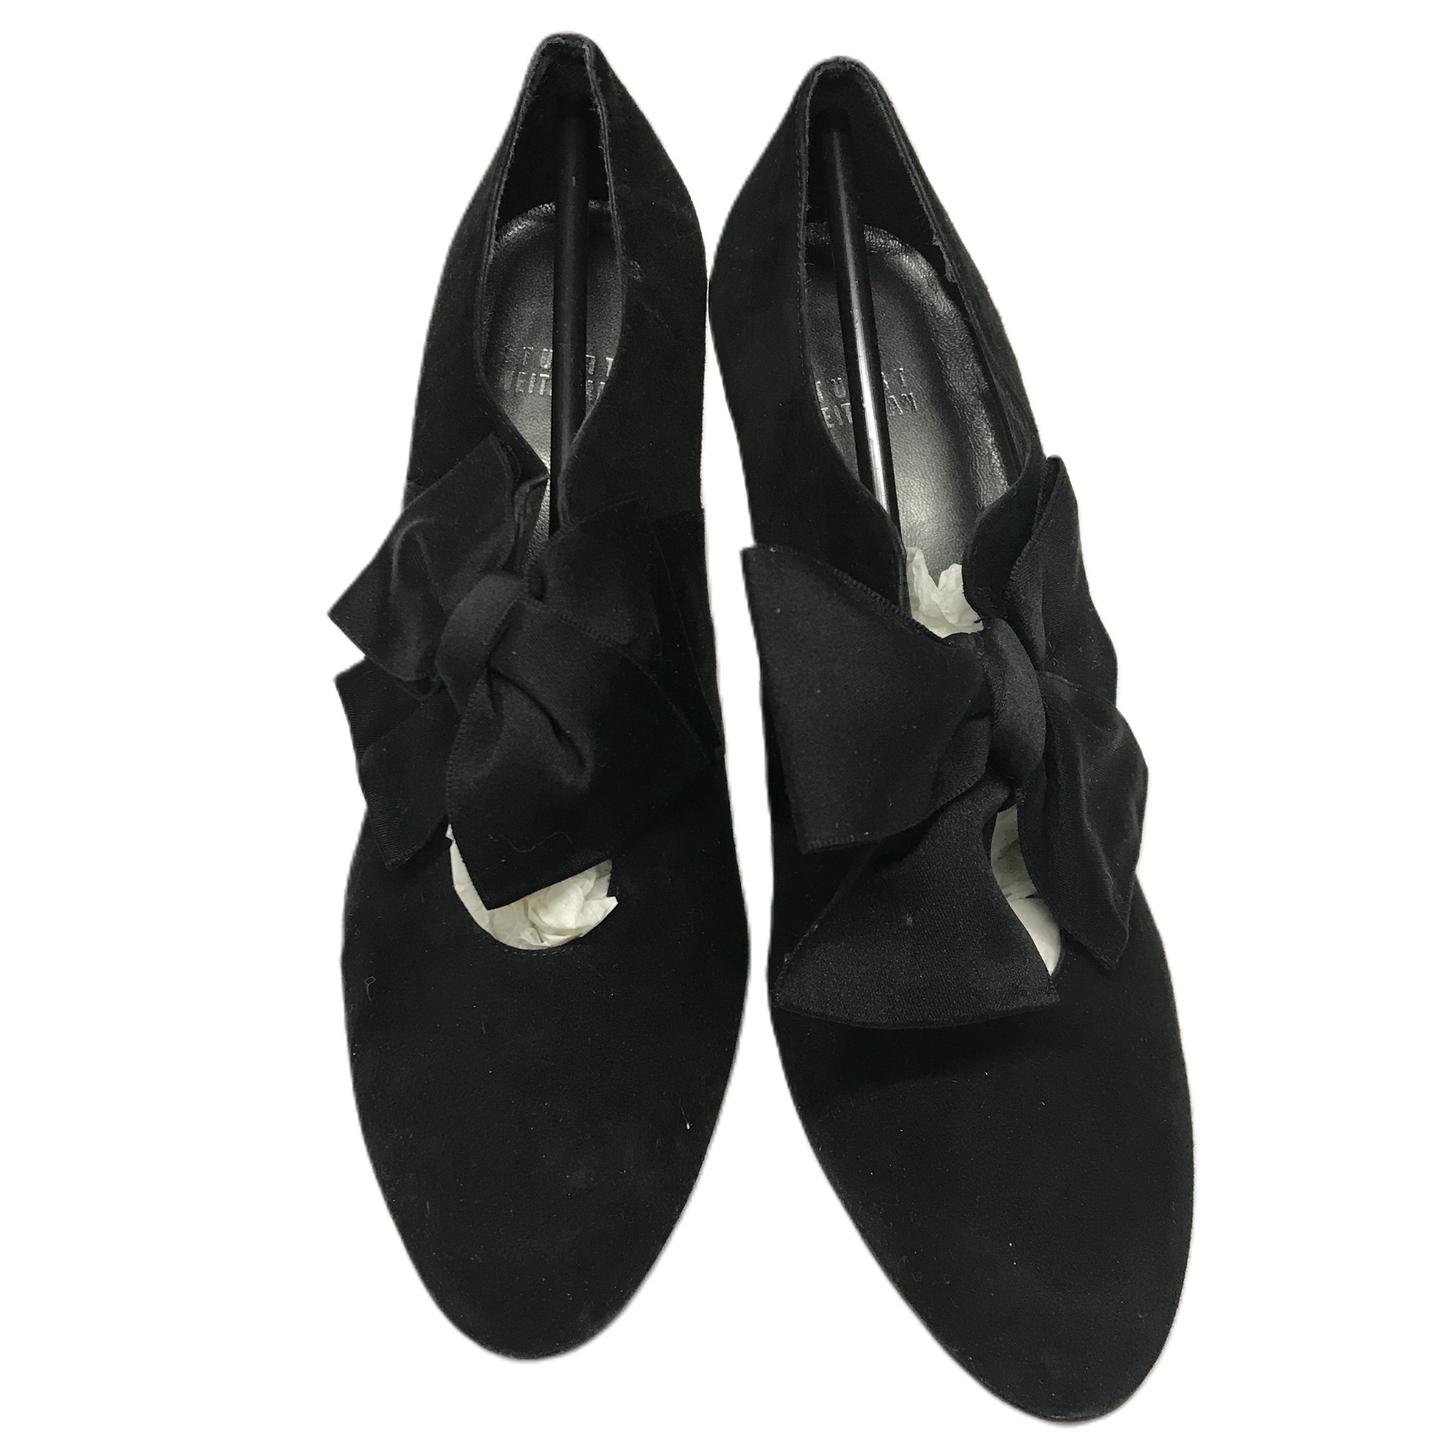 Black Shoes Heels Stiletto By Stuart Weitzman, Size: 7.5